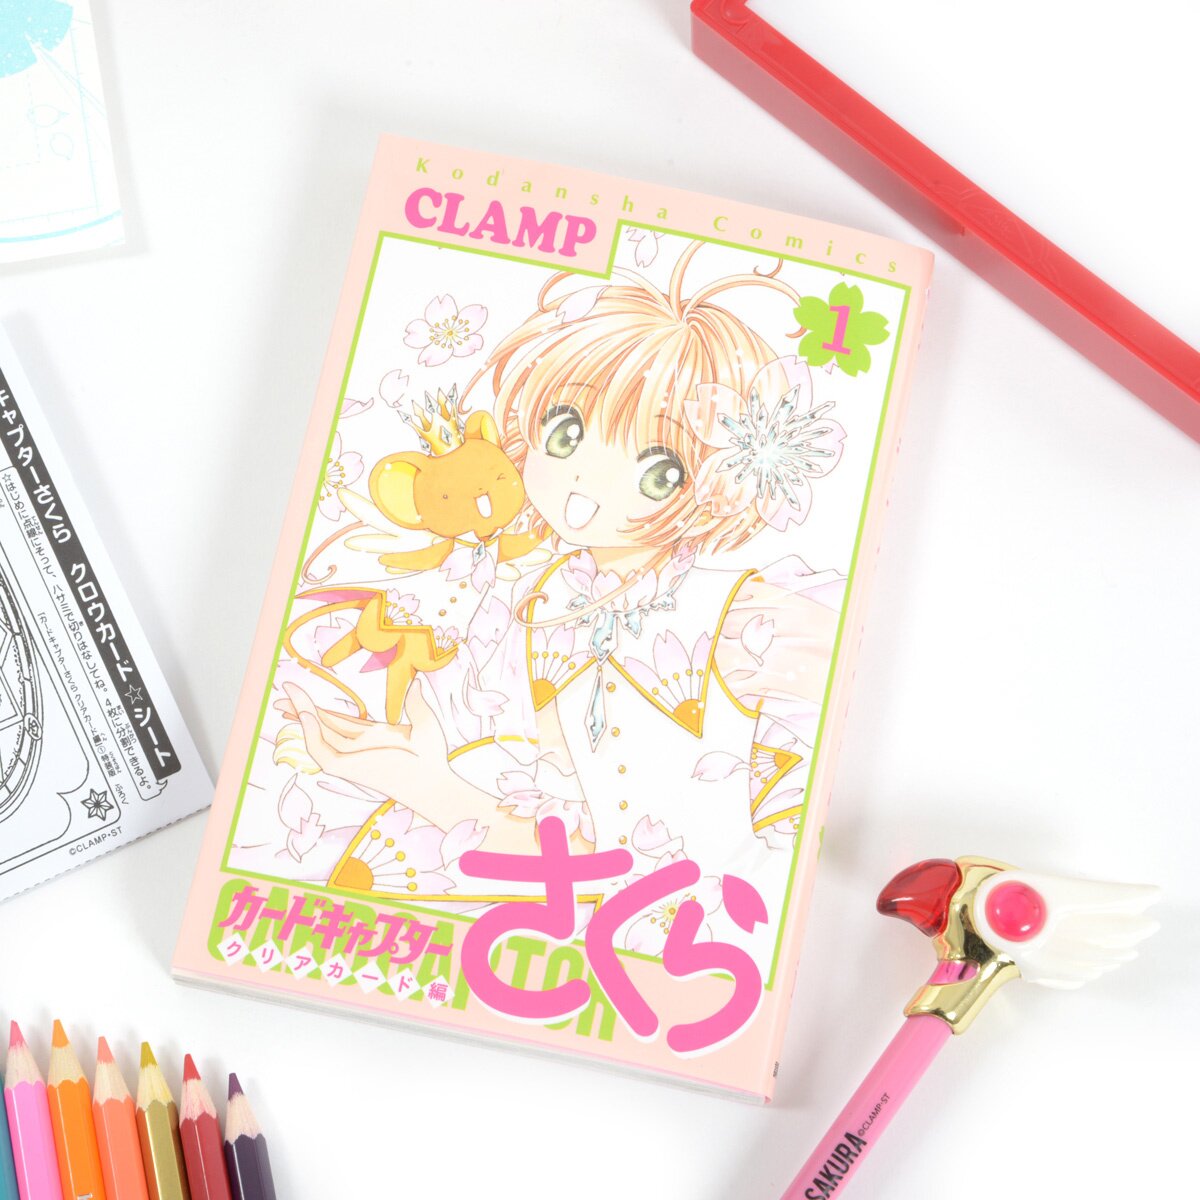 PopMagick] — Sakura Card Captors, by Pippa Scientia